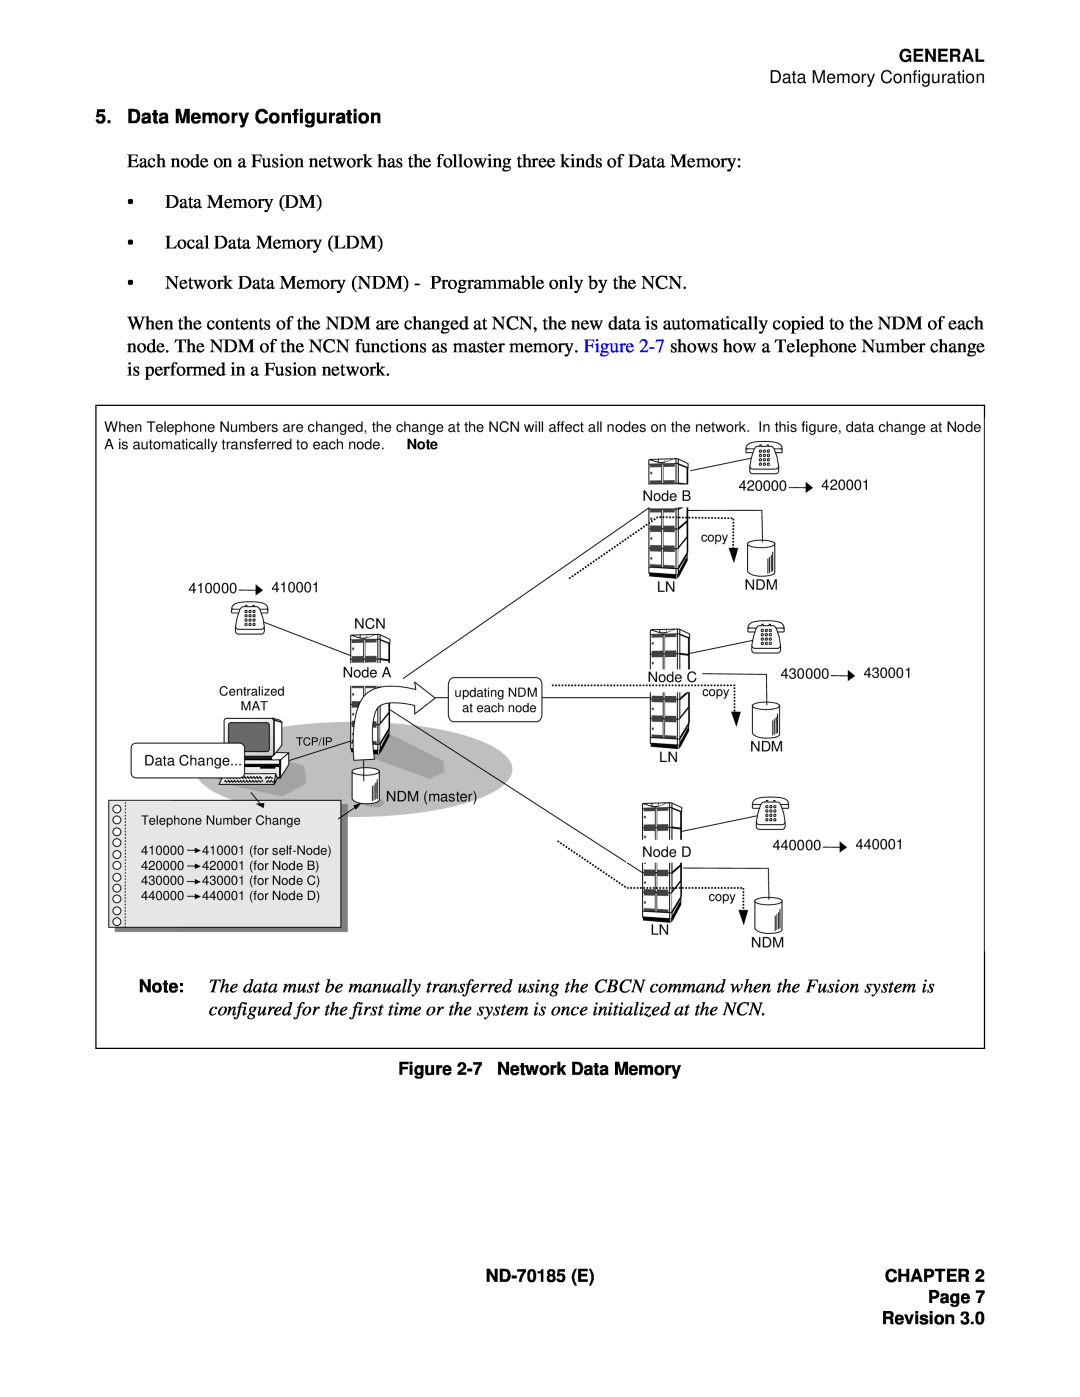 NEC NEAX2400 system manual Data Memory Configuration 